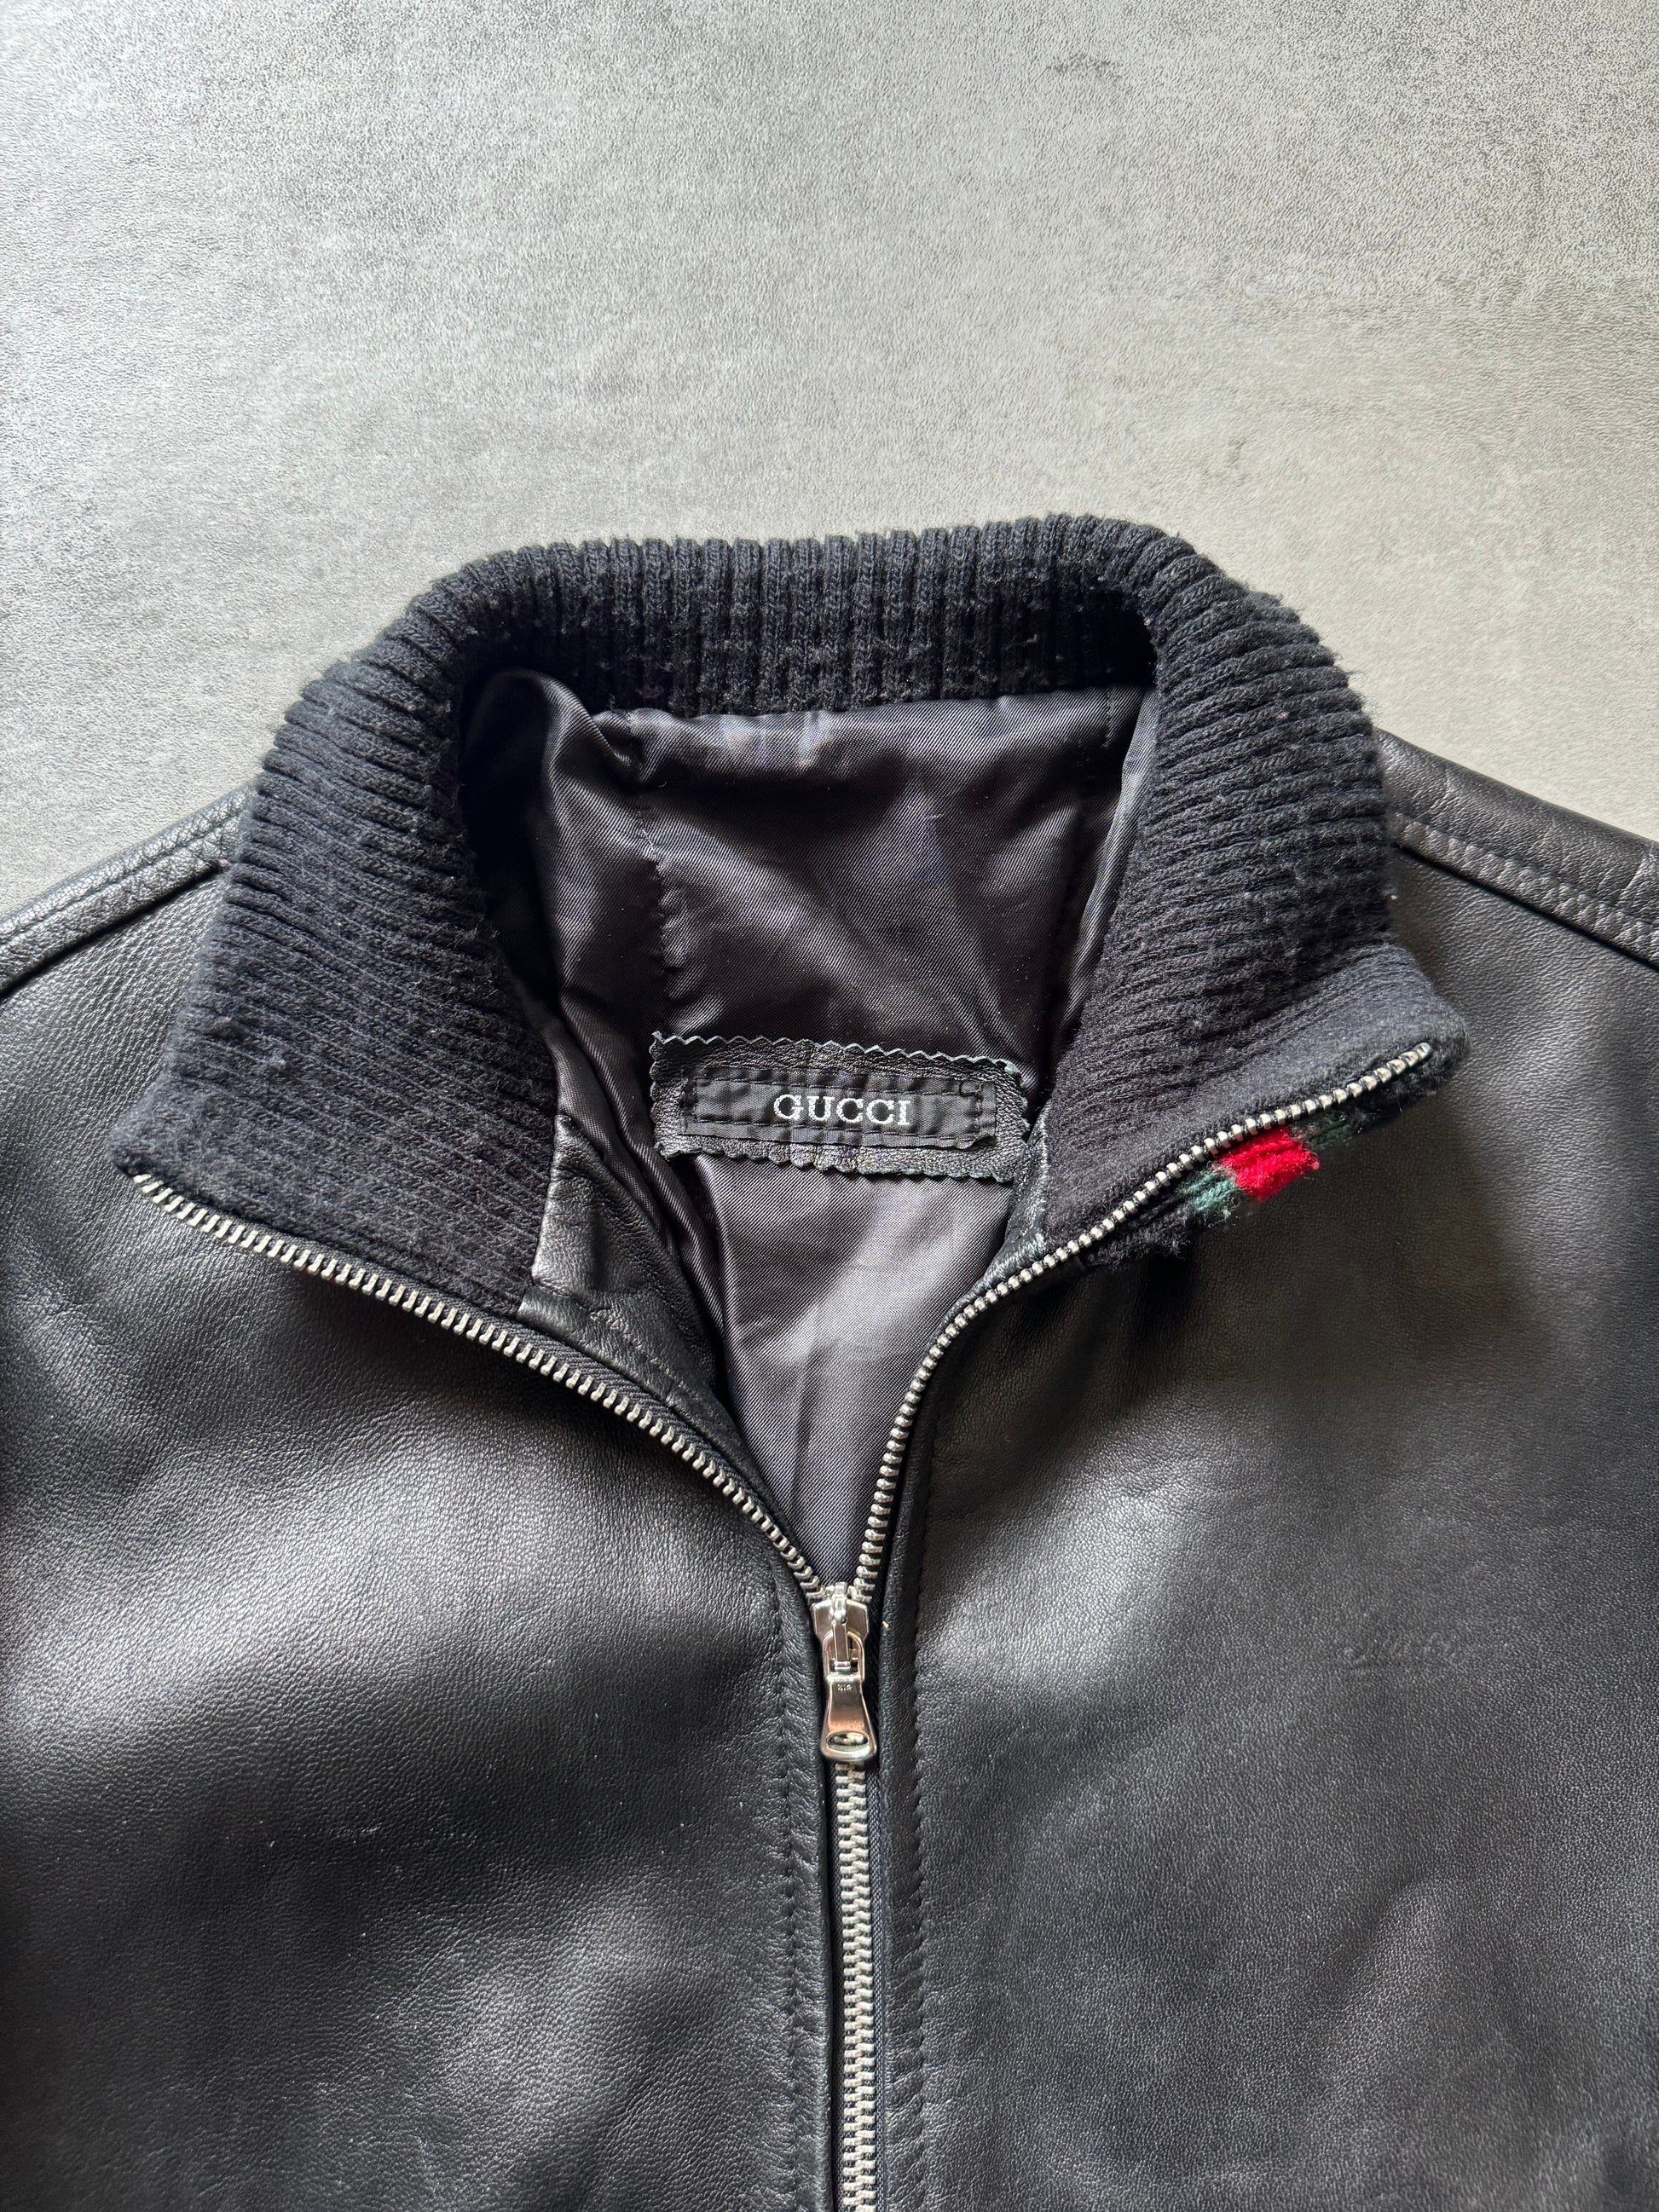 1990s Gucci Signature Black Leather Italian Jacket (M) - 7